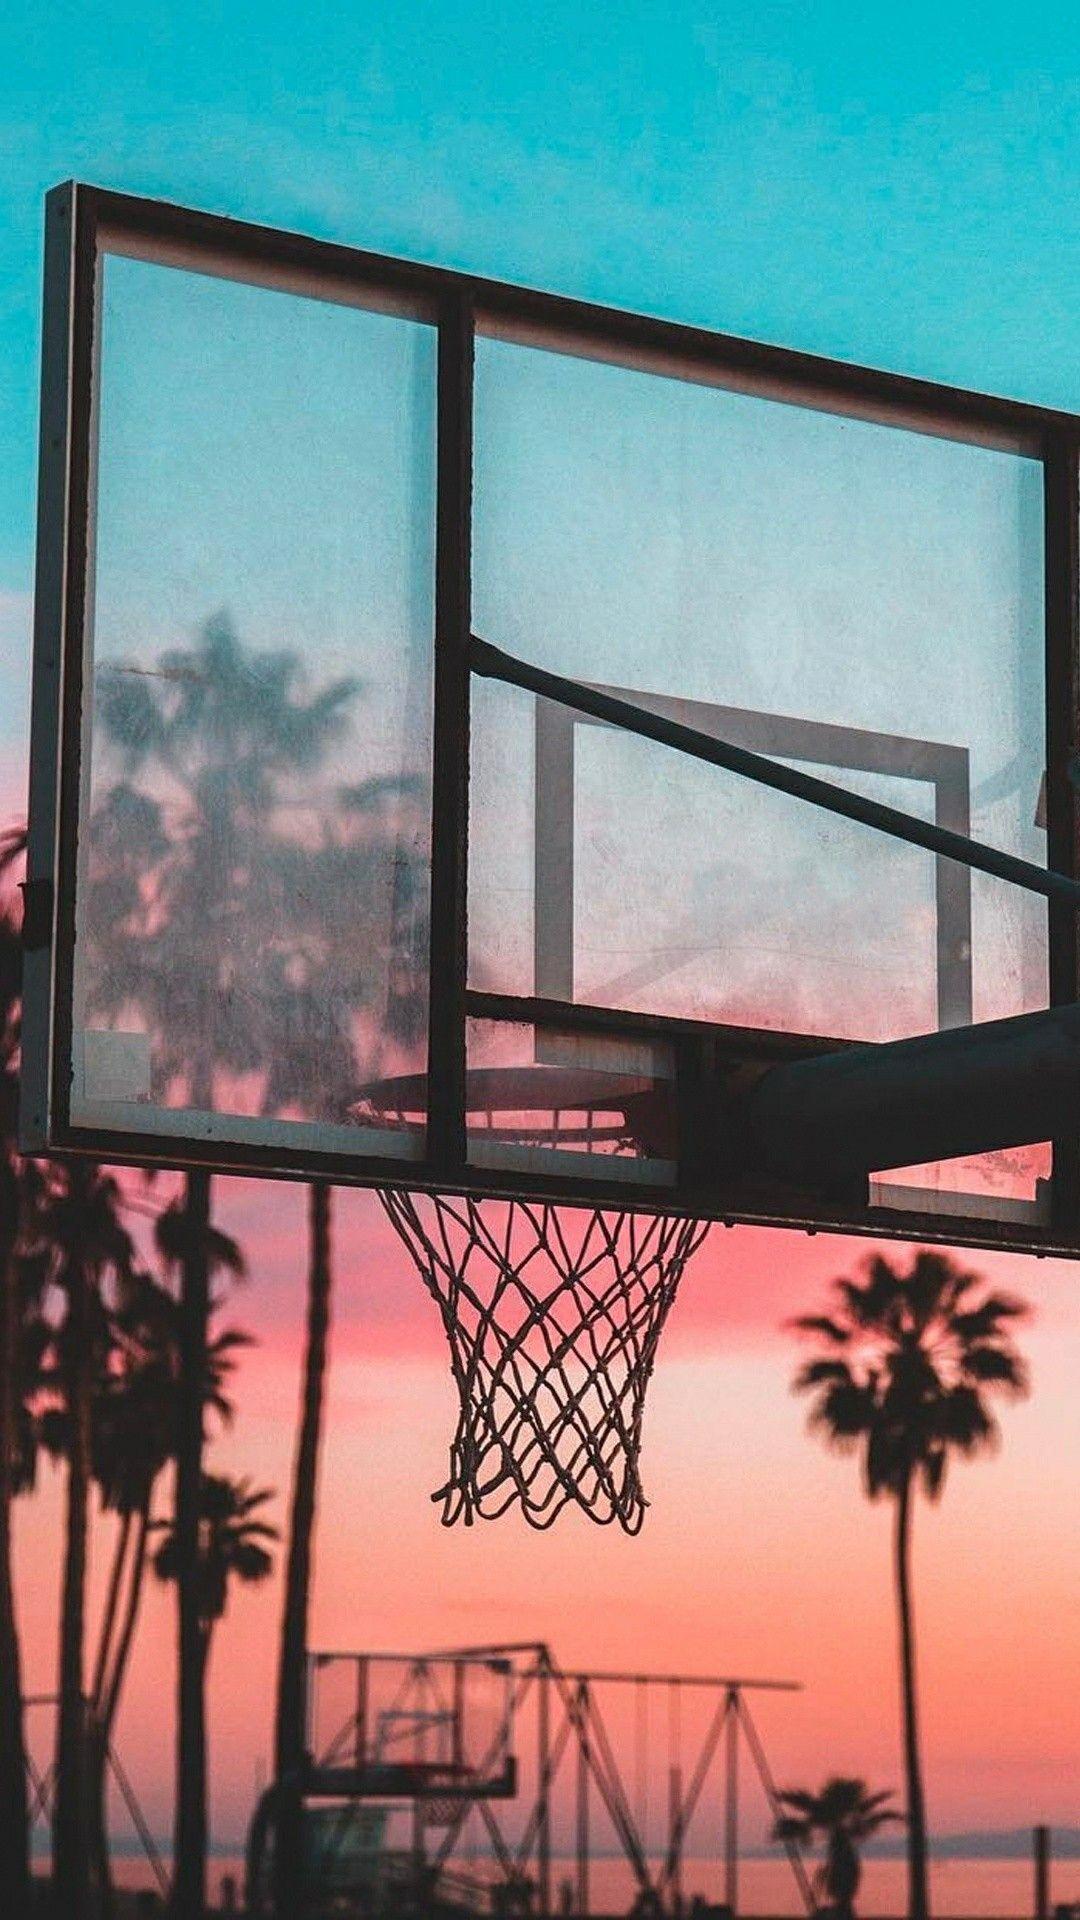 Nike Basketball Iphone Wallpapers